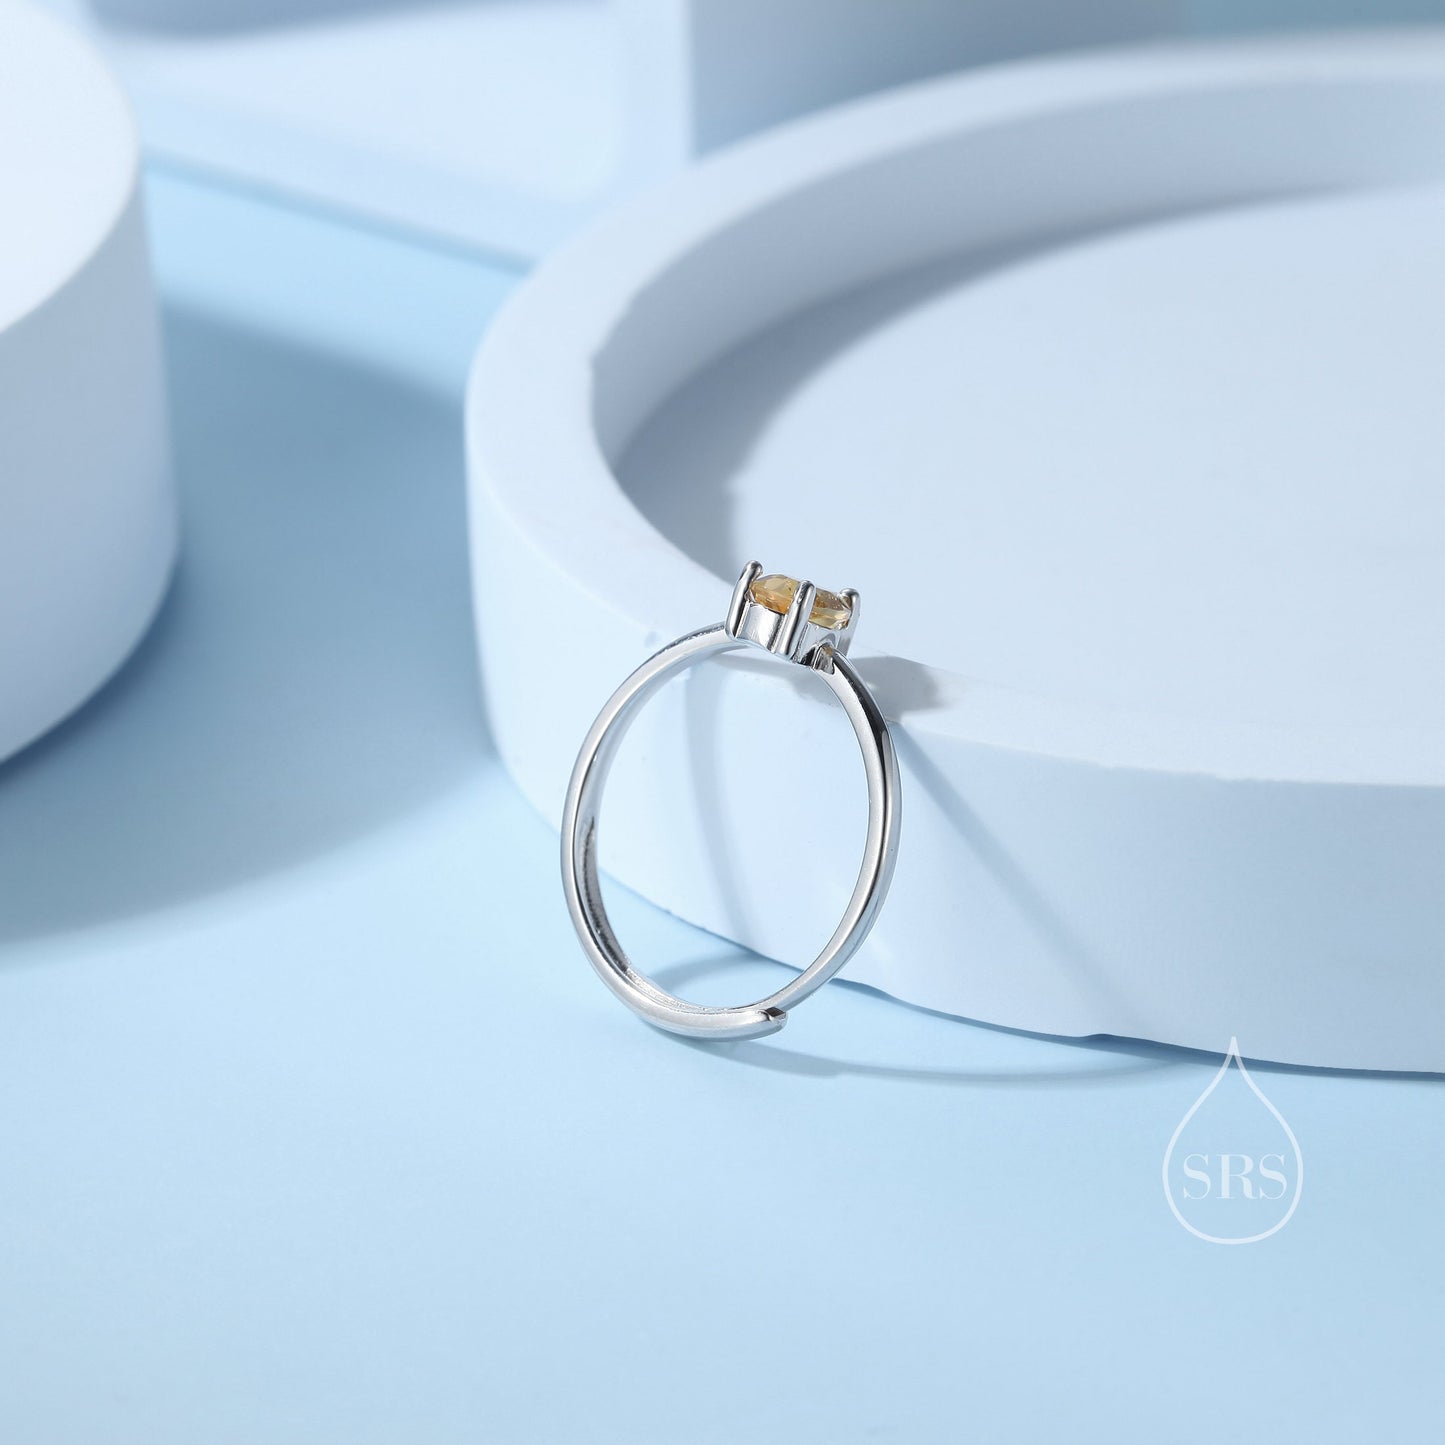 Natural Citrine Droplet Ring in Sterling Silver,  4x6mm, Prong Set Pear Cut, Adjustable Size, Genuine Citrine Ring, November Birthstone